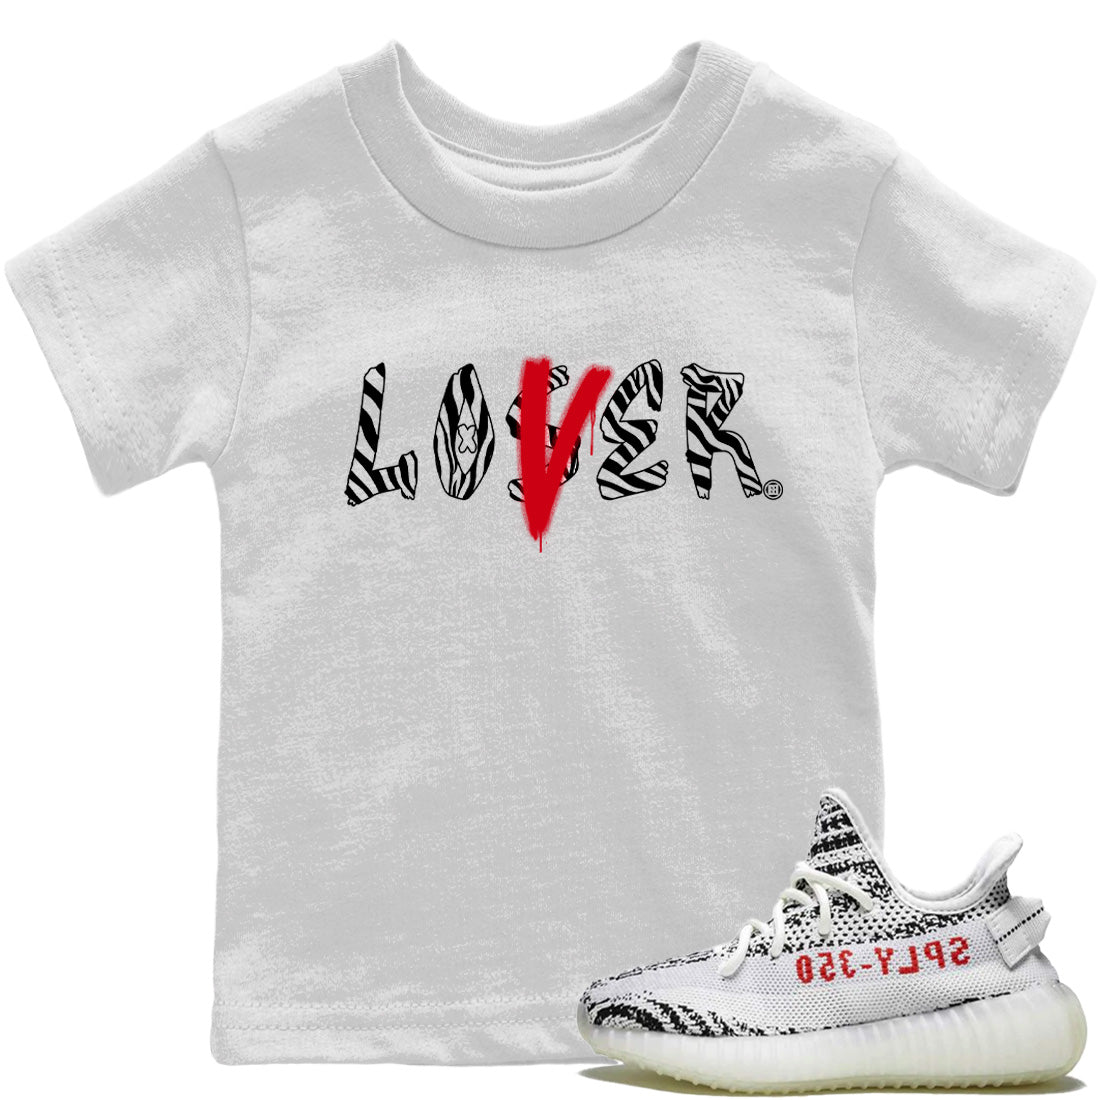 Yeezy 350 Zebra Sneaker Match Tees Loser Lover Sneaker Tees Yeezy 350 Zebra Sneaker Release Tees Kids Shirts